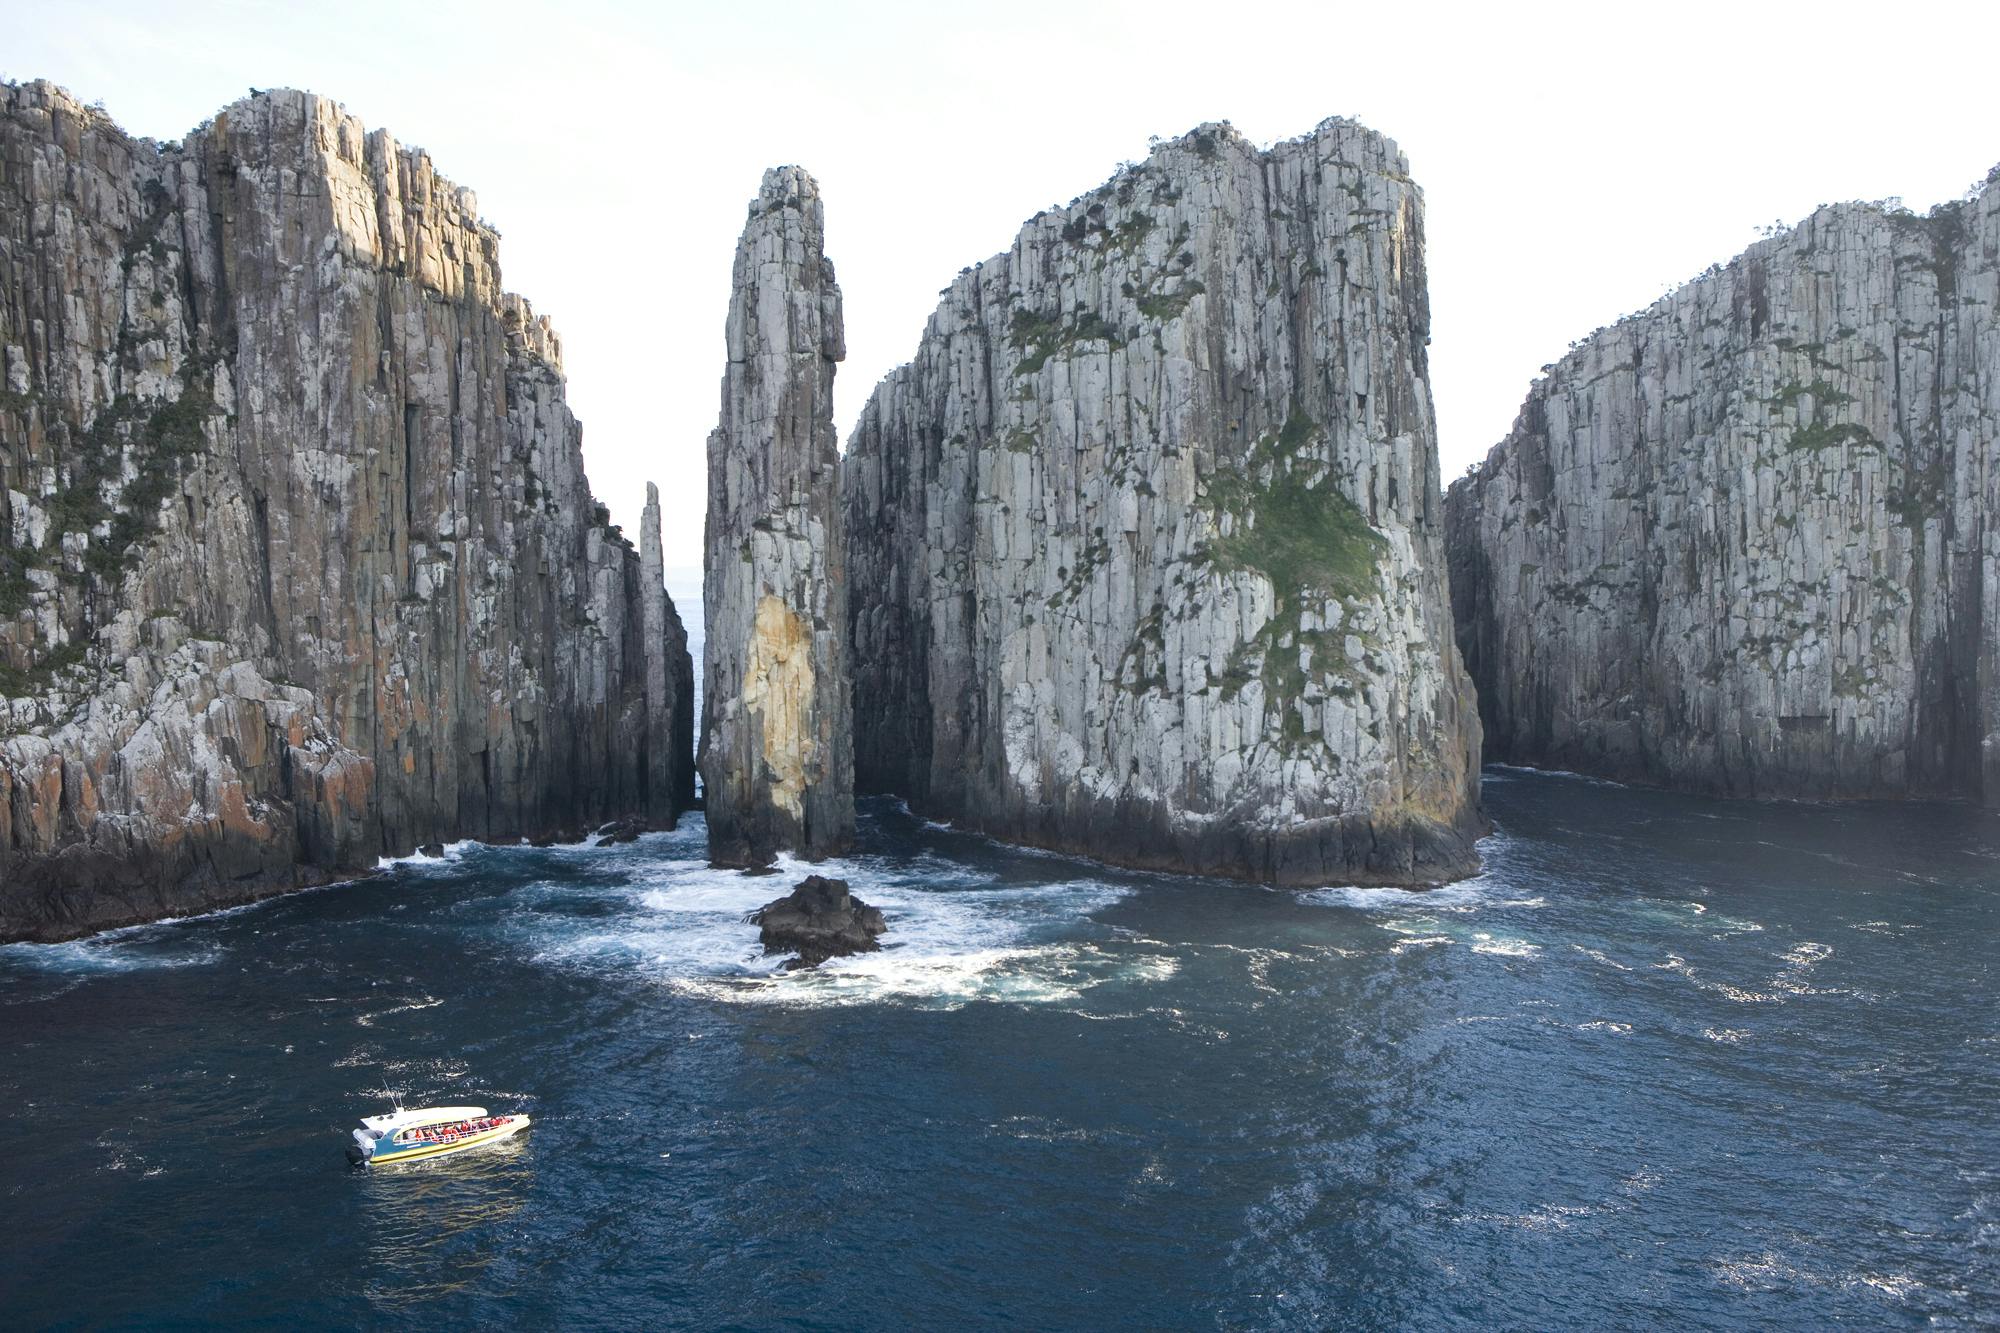 Tasman Island Cruises from Hobart with Port Arthur visit